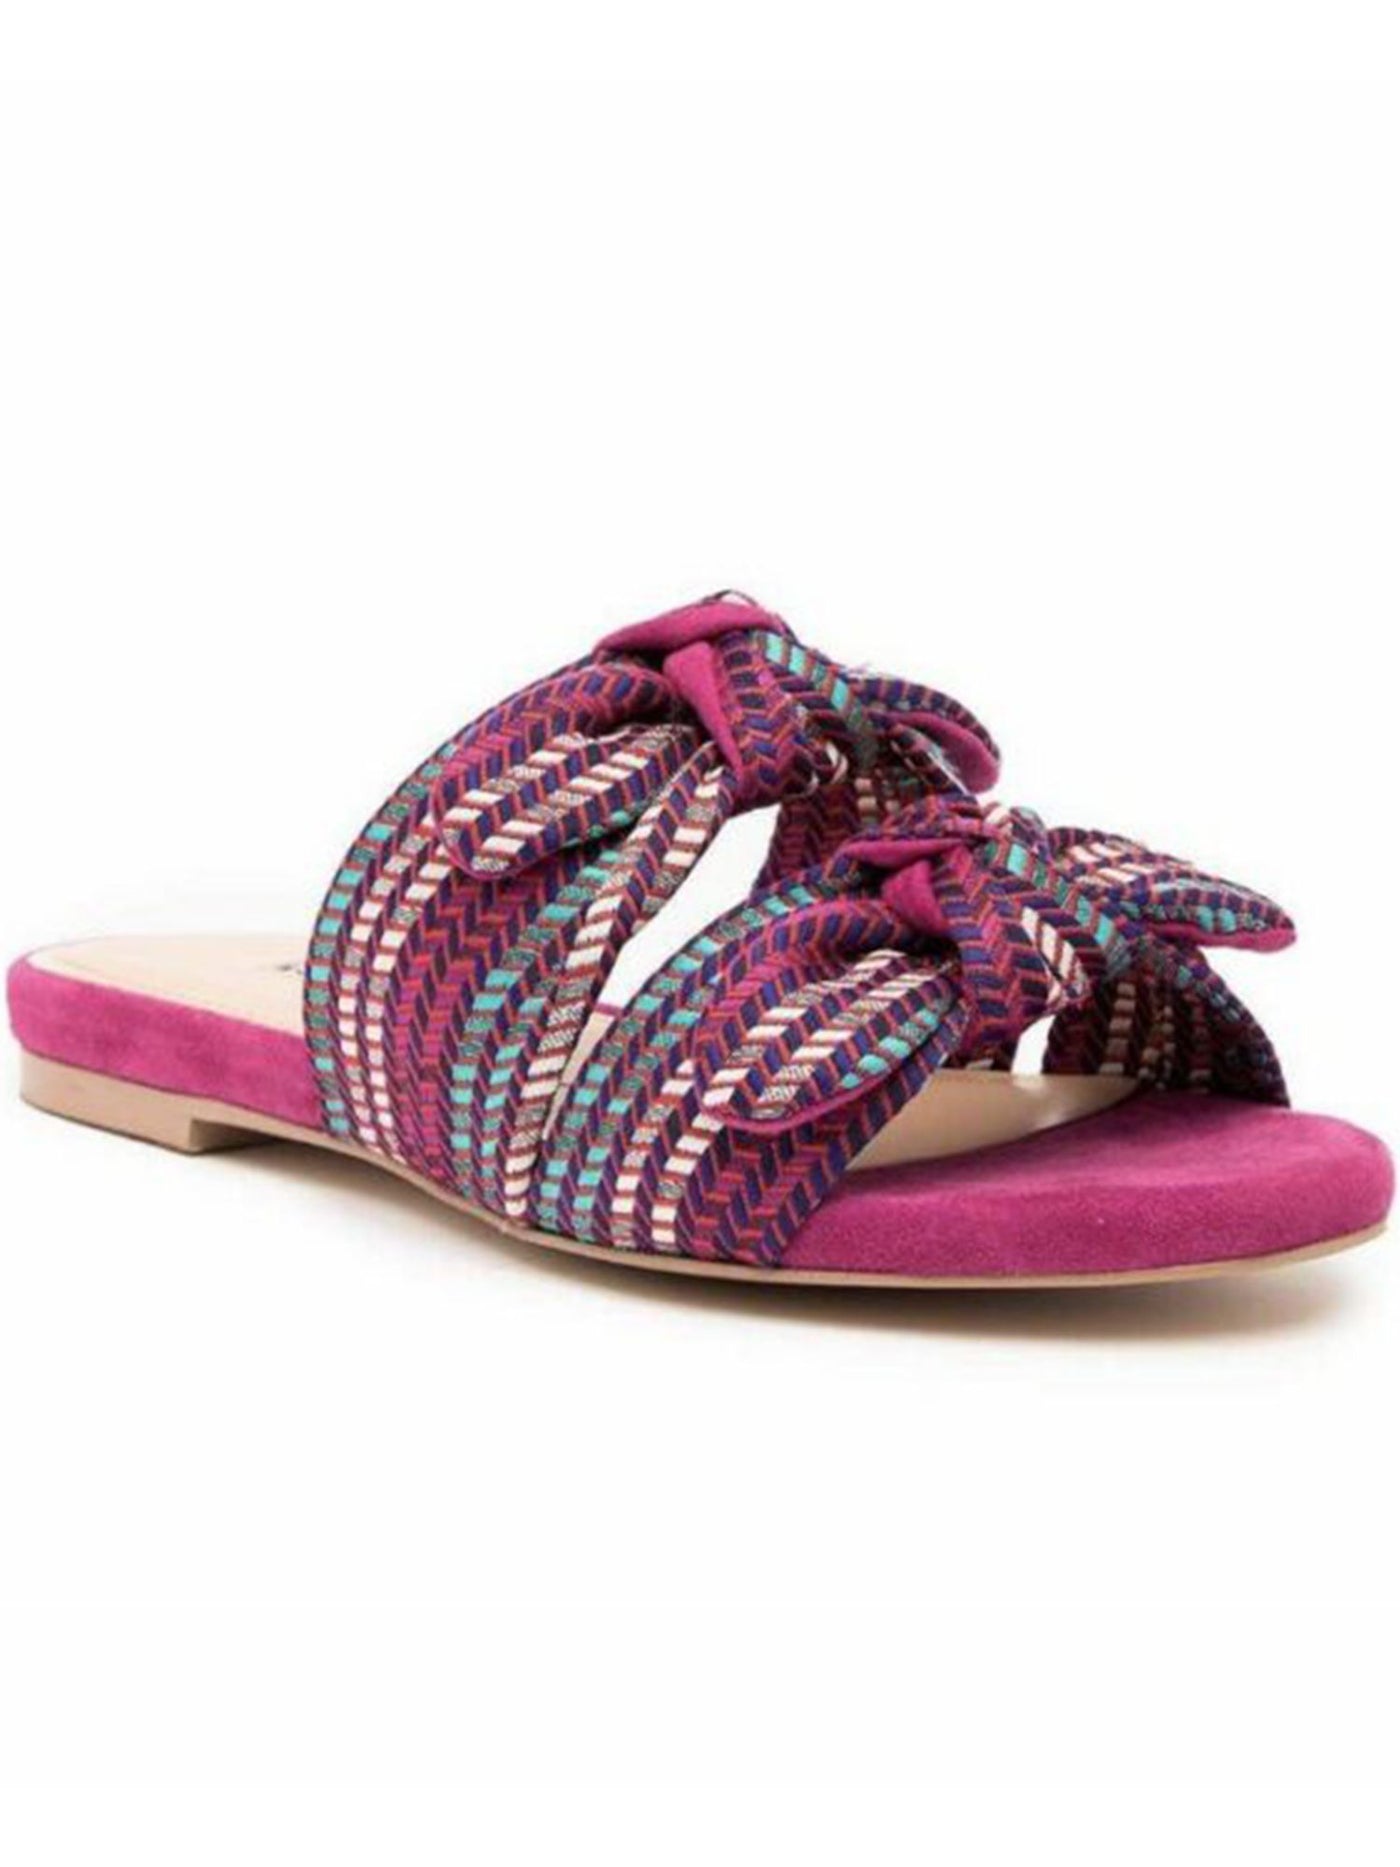 CHARLES DAVID Womens Pink Herringbone Bow Accent Comfort Soufflï¿½ Round Toe Block Heel Slide Sandals Shoes 7 M